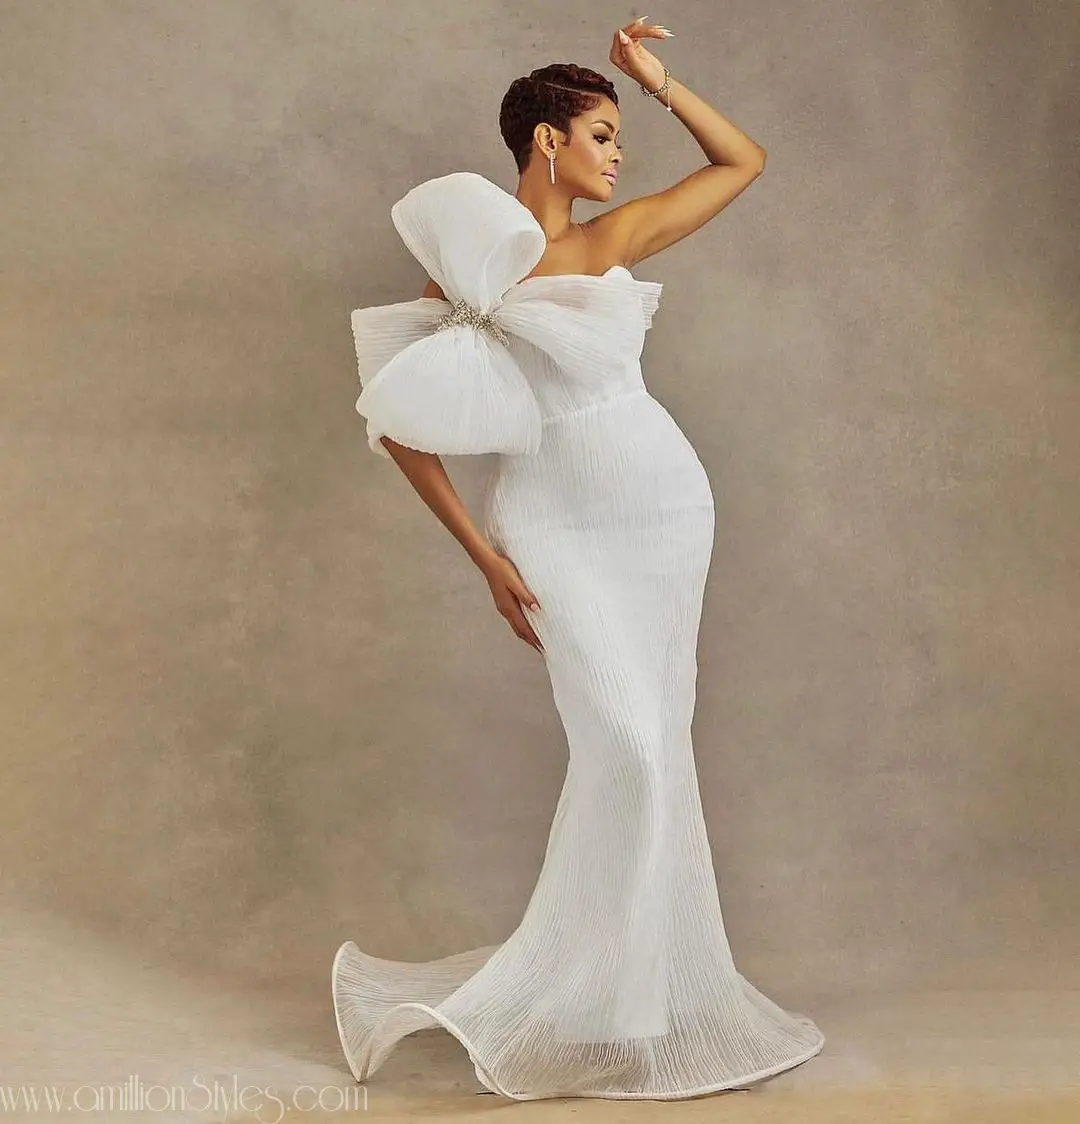 13 Civil Wedding Style Inspiration For Brides